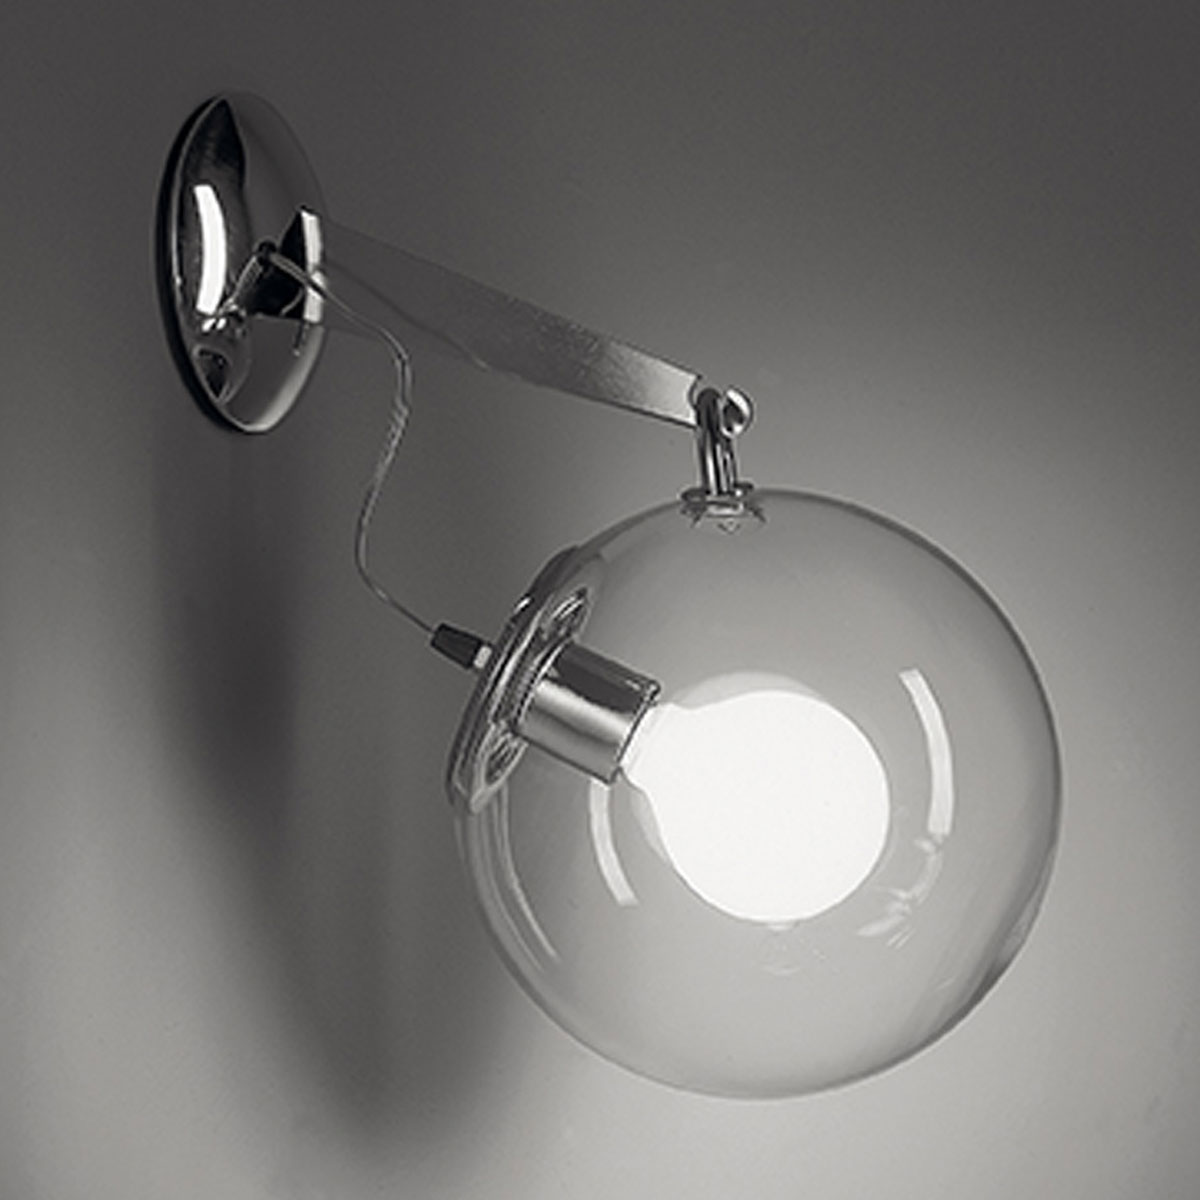 Artemide Miconos Design wandlamp glazen bol LUMZ at Work